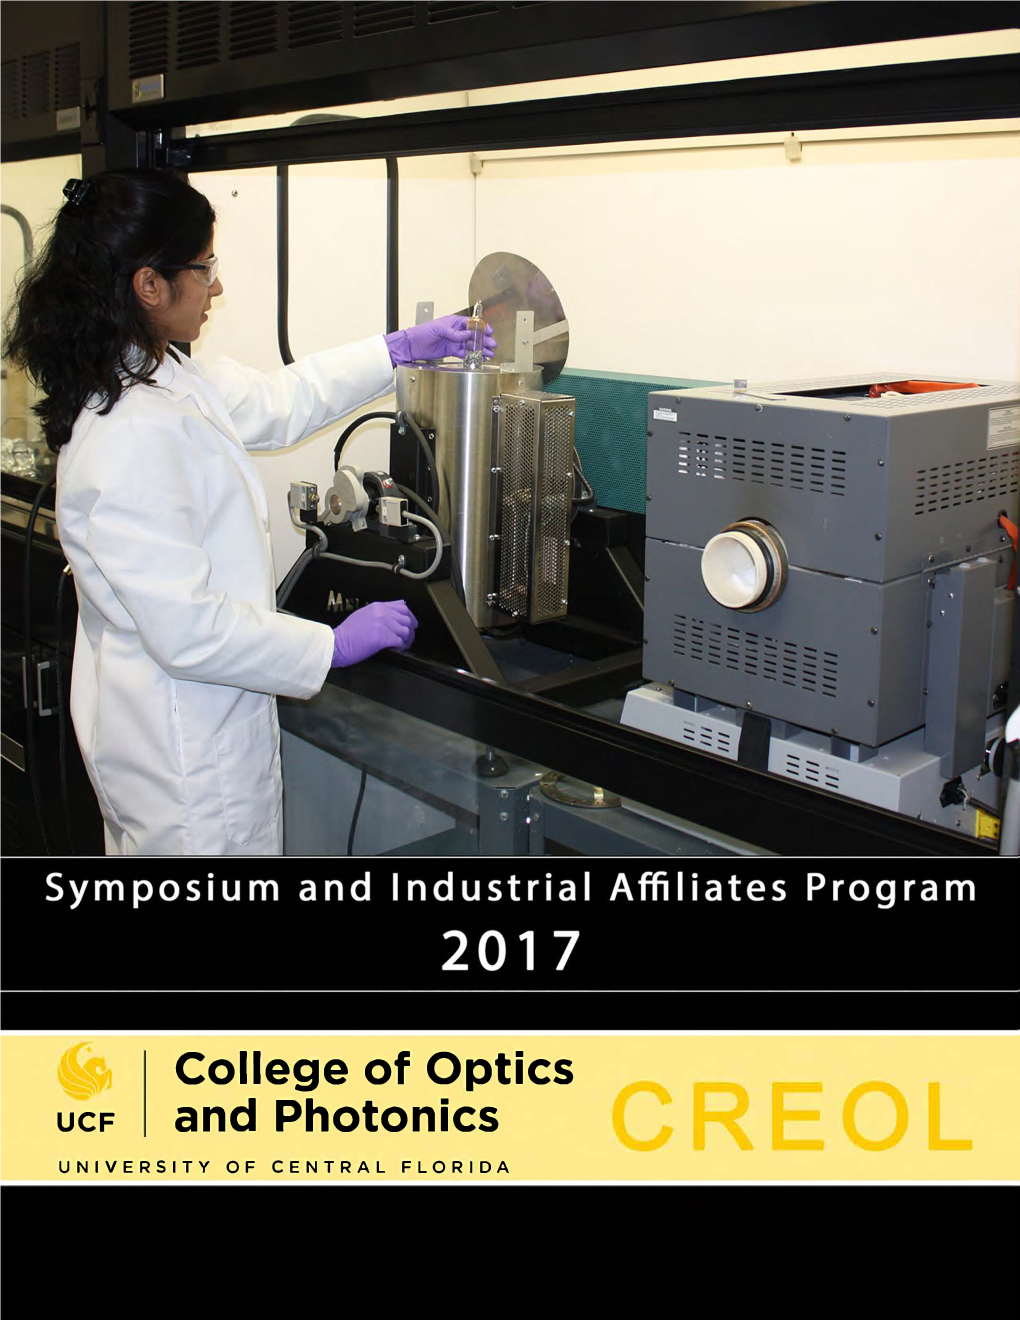 College of Optics and Photonics